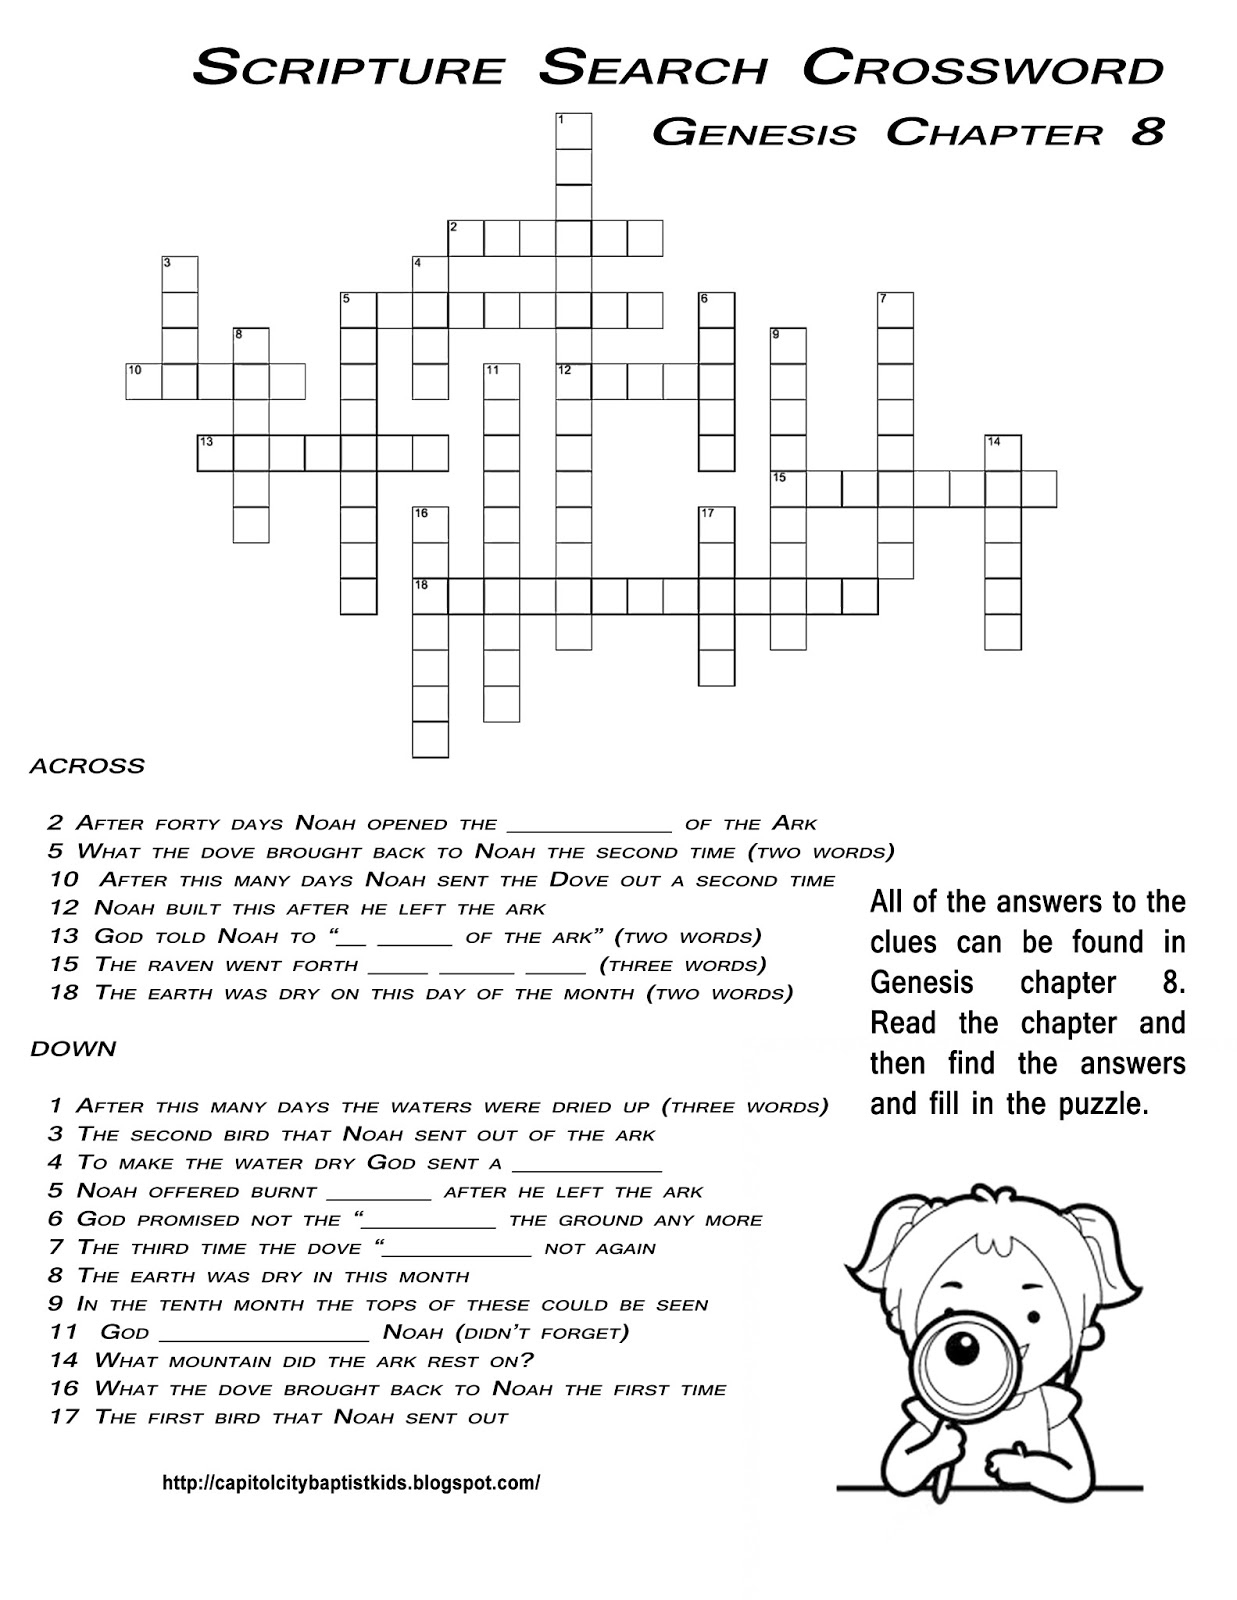 Ccbc Kids Corner: Scripture Search Crossword #3 Genesis 8 - Printable Crossword #3